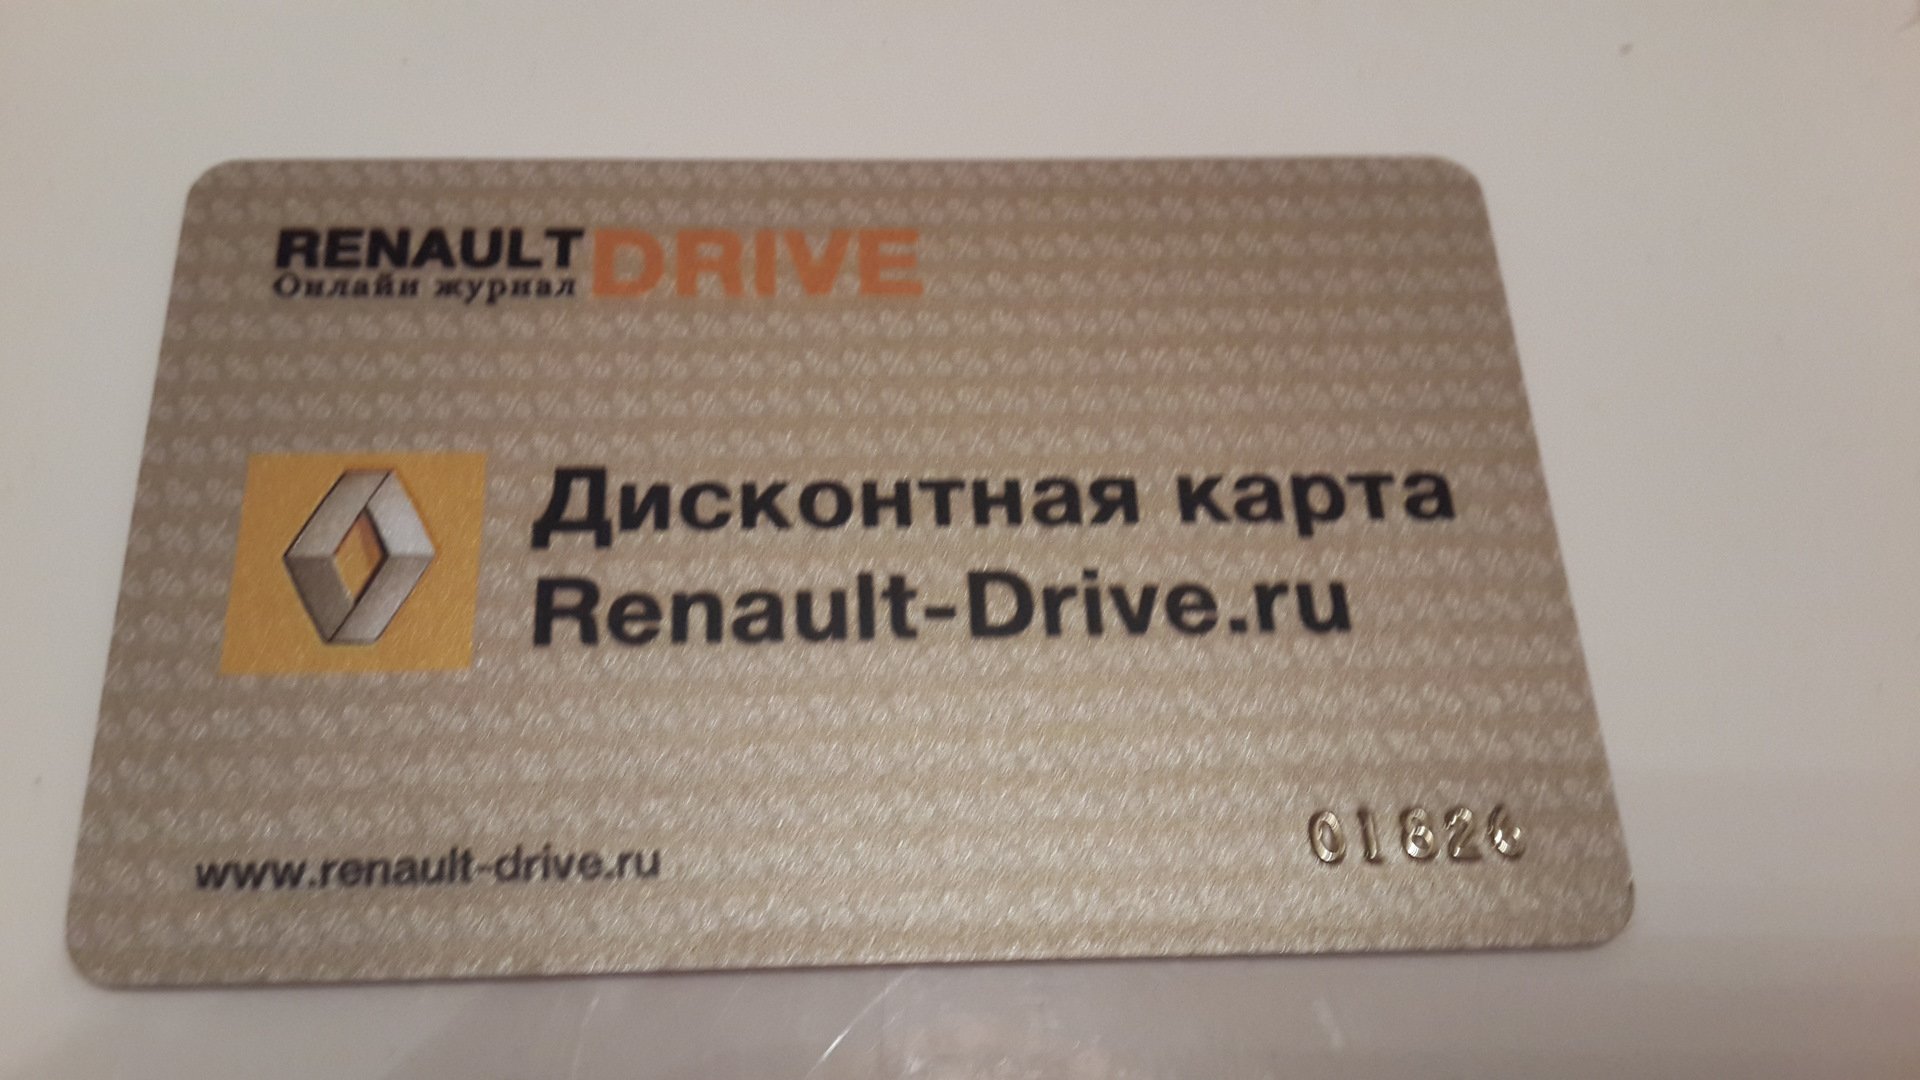 Drive card. Дисконтная карта Renault-Drive карта. Клубная карта Рено. Карта автоклуба. Скидочная карта Renault.